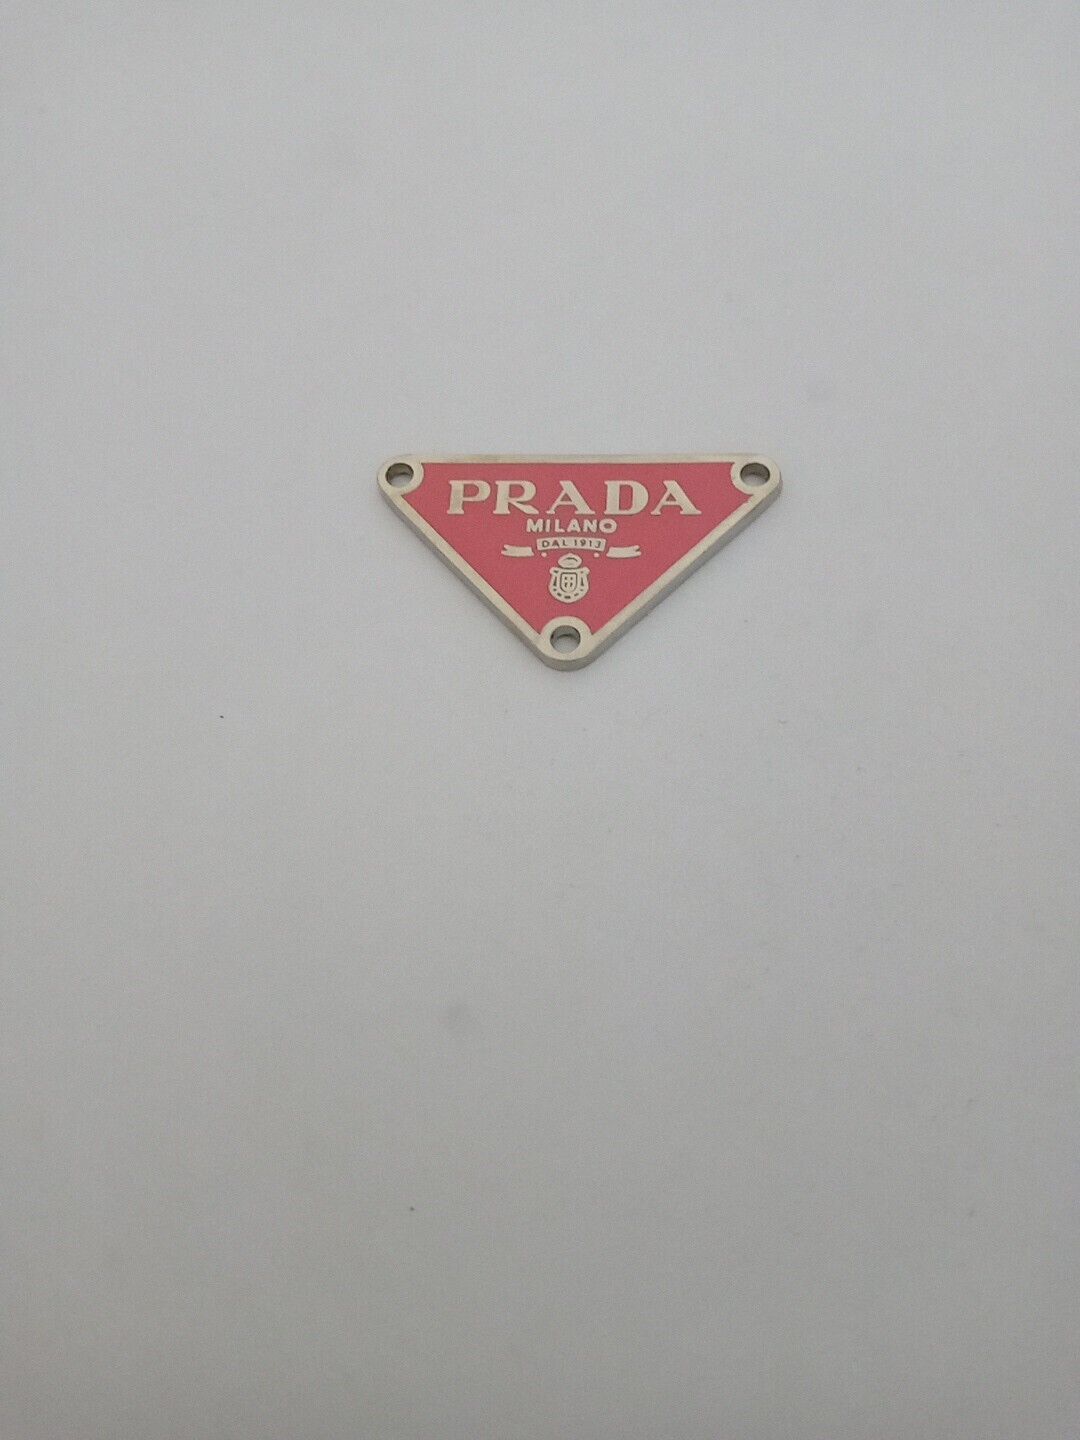 One 38mm Prada Logo Triangle with trim  Silver tone Button  Zipperpull